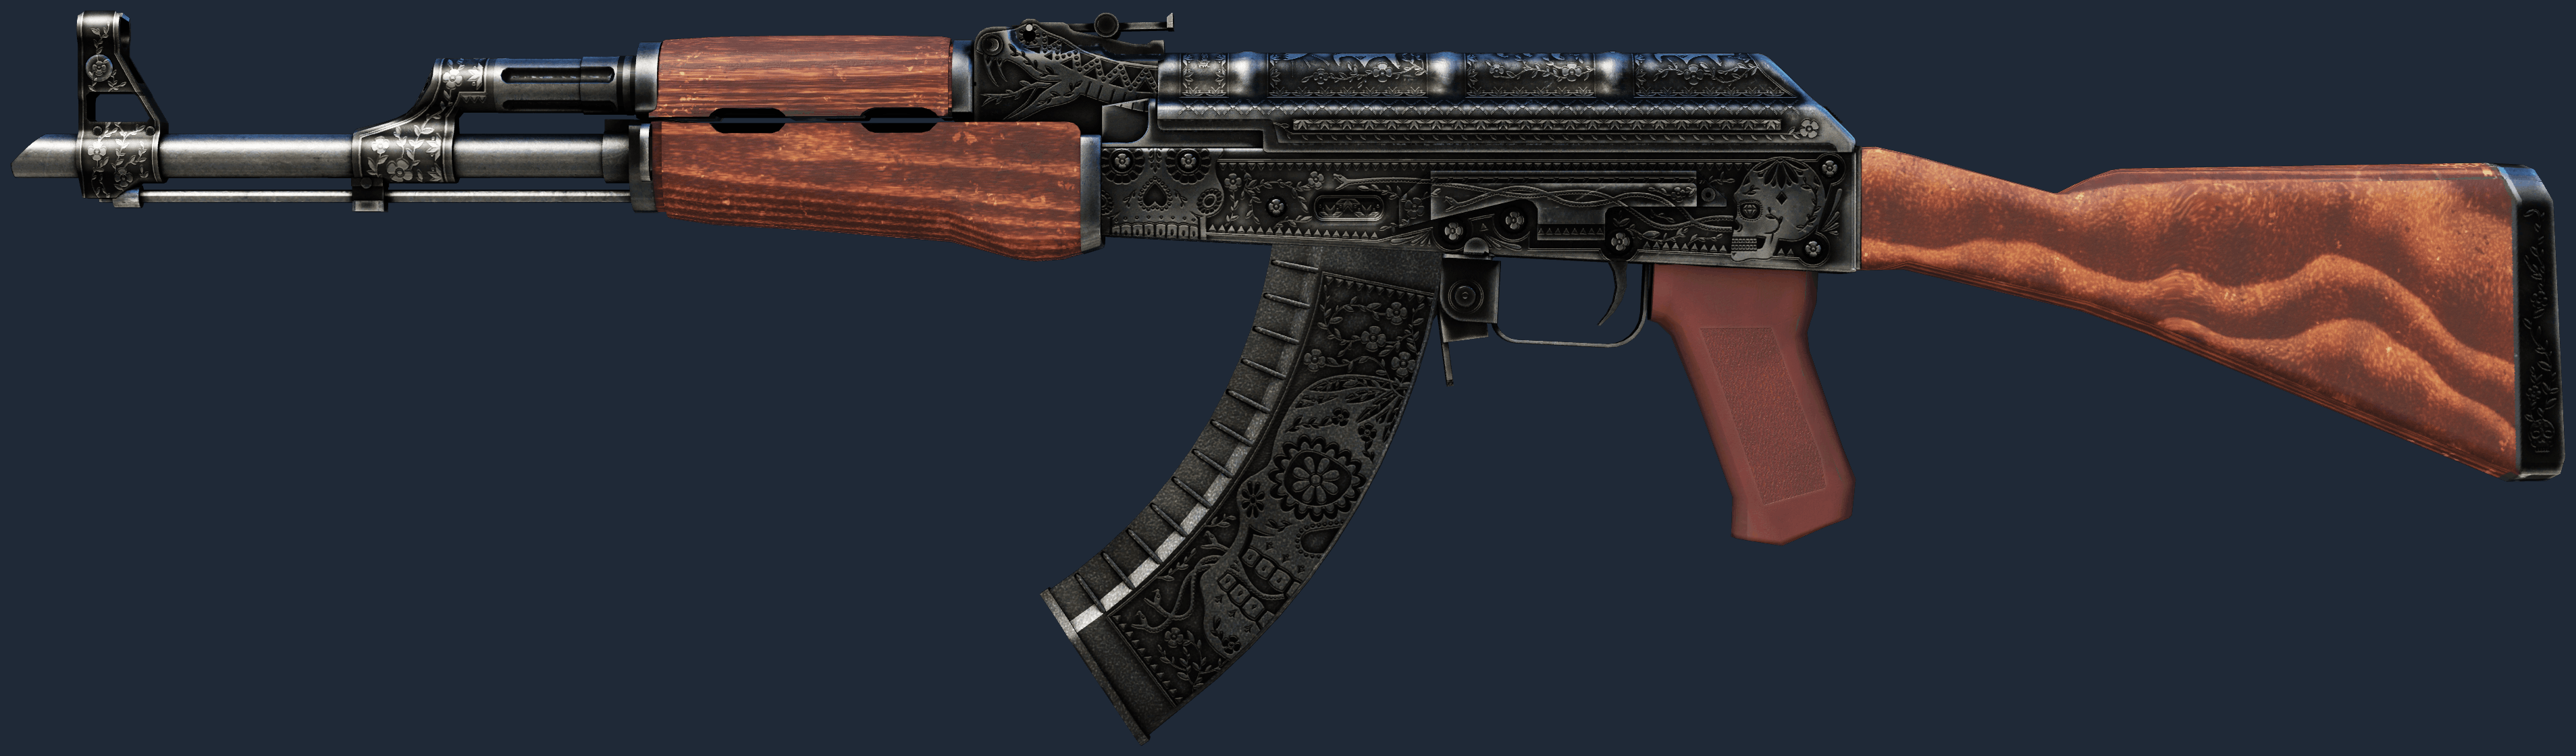 AK-47 | Cartel Screenshot